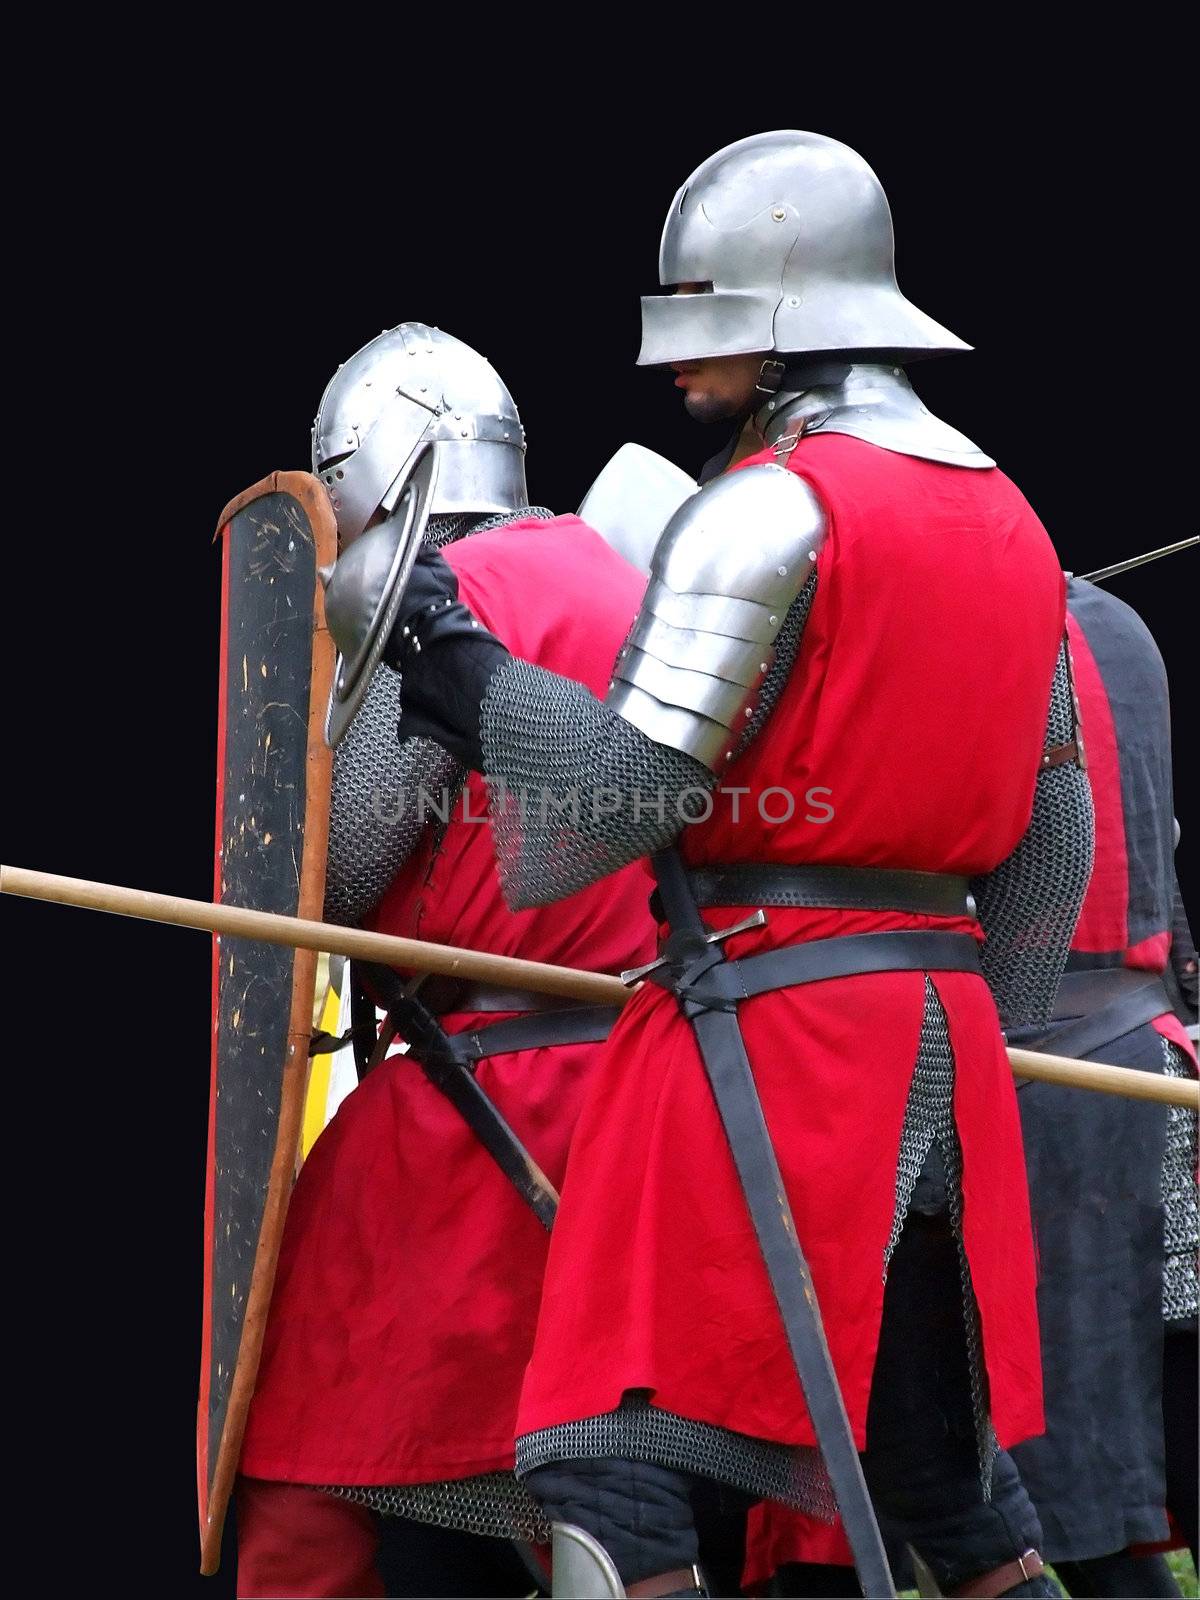 Medieval soldiers in battle by PauloResende